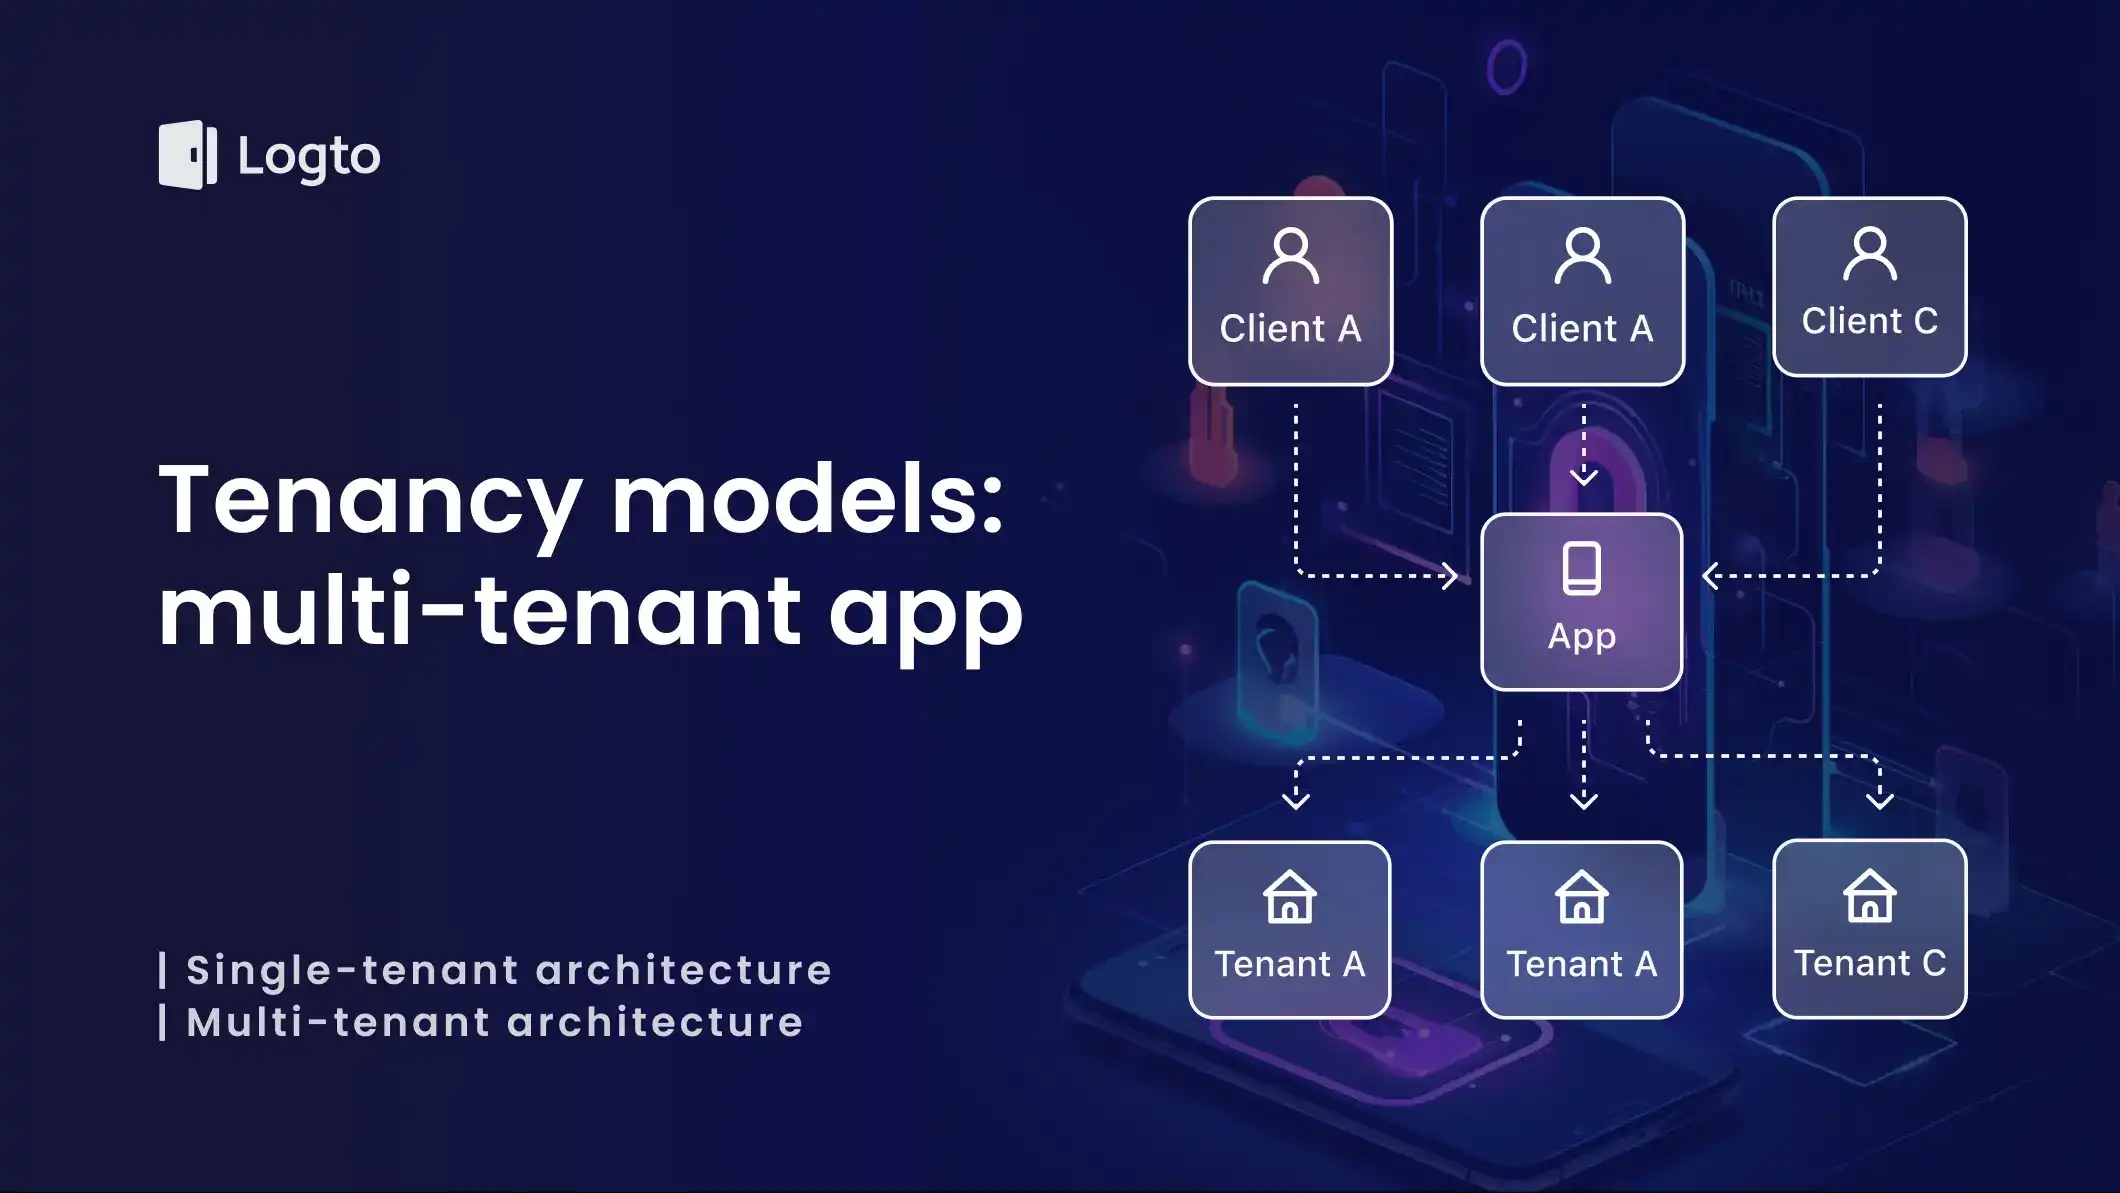 Tenancy models for a multi-tenant app